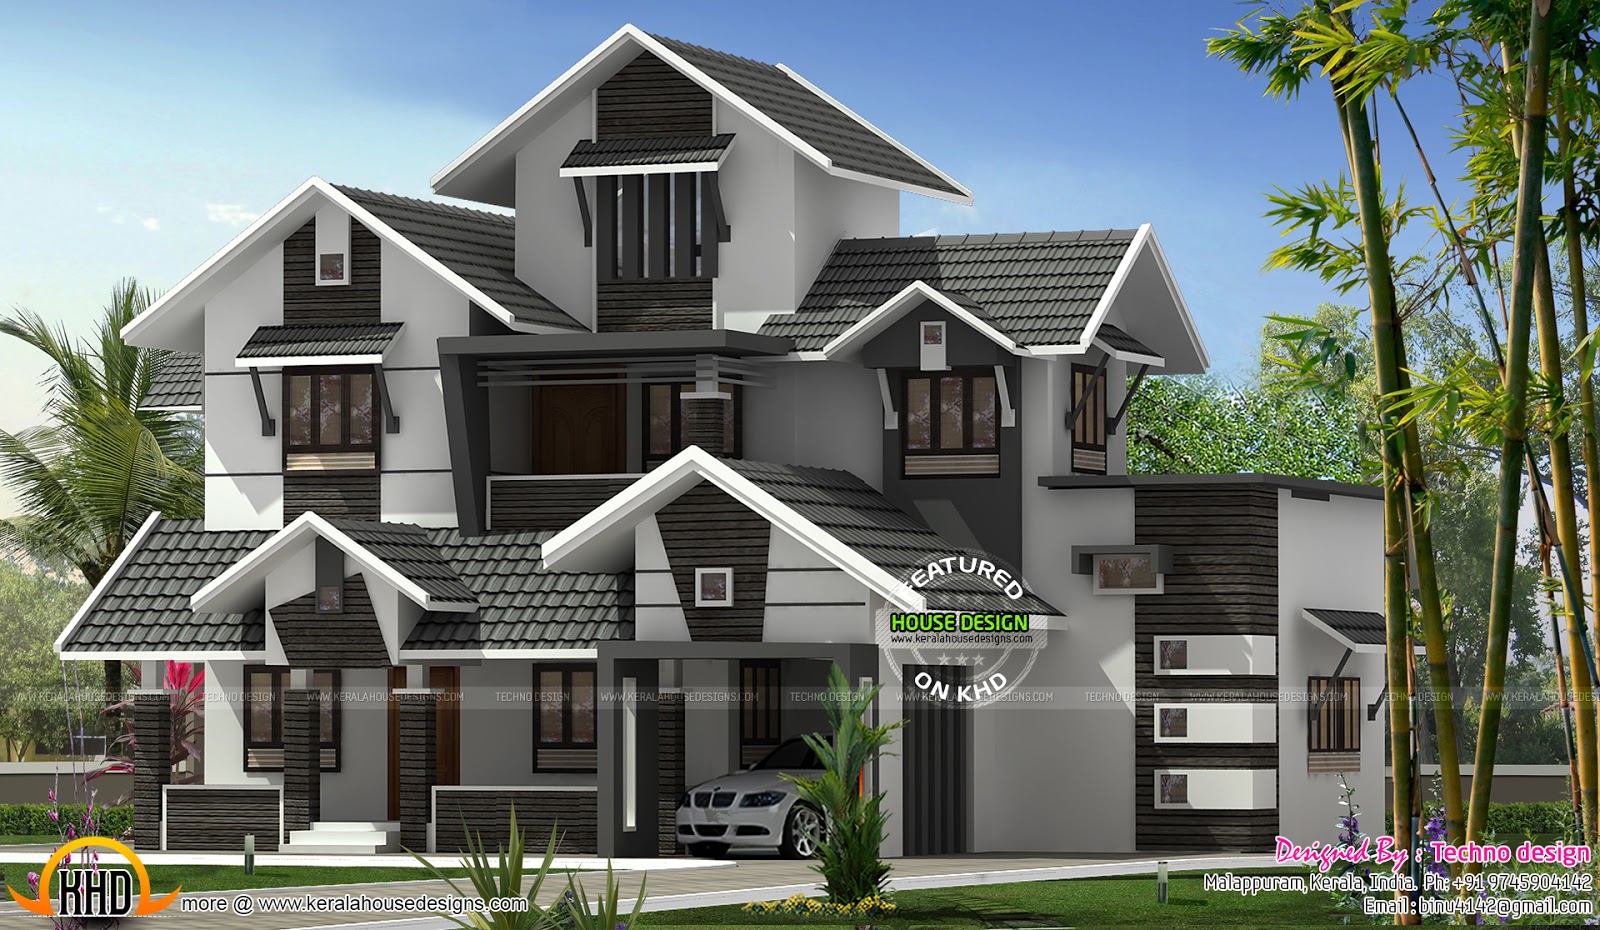 Modern Kerala  home  design  Kerala  home  design  and floor plans 